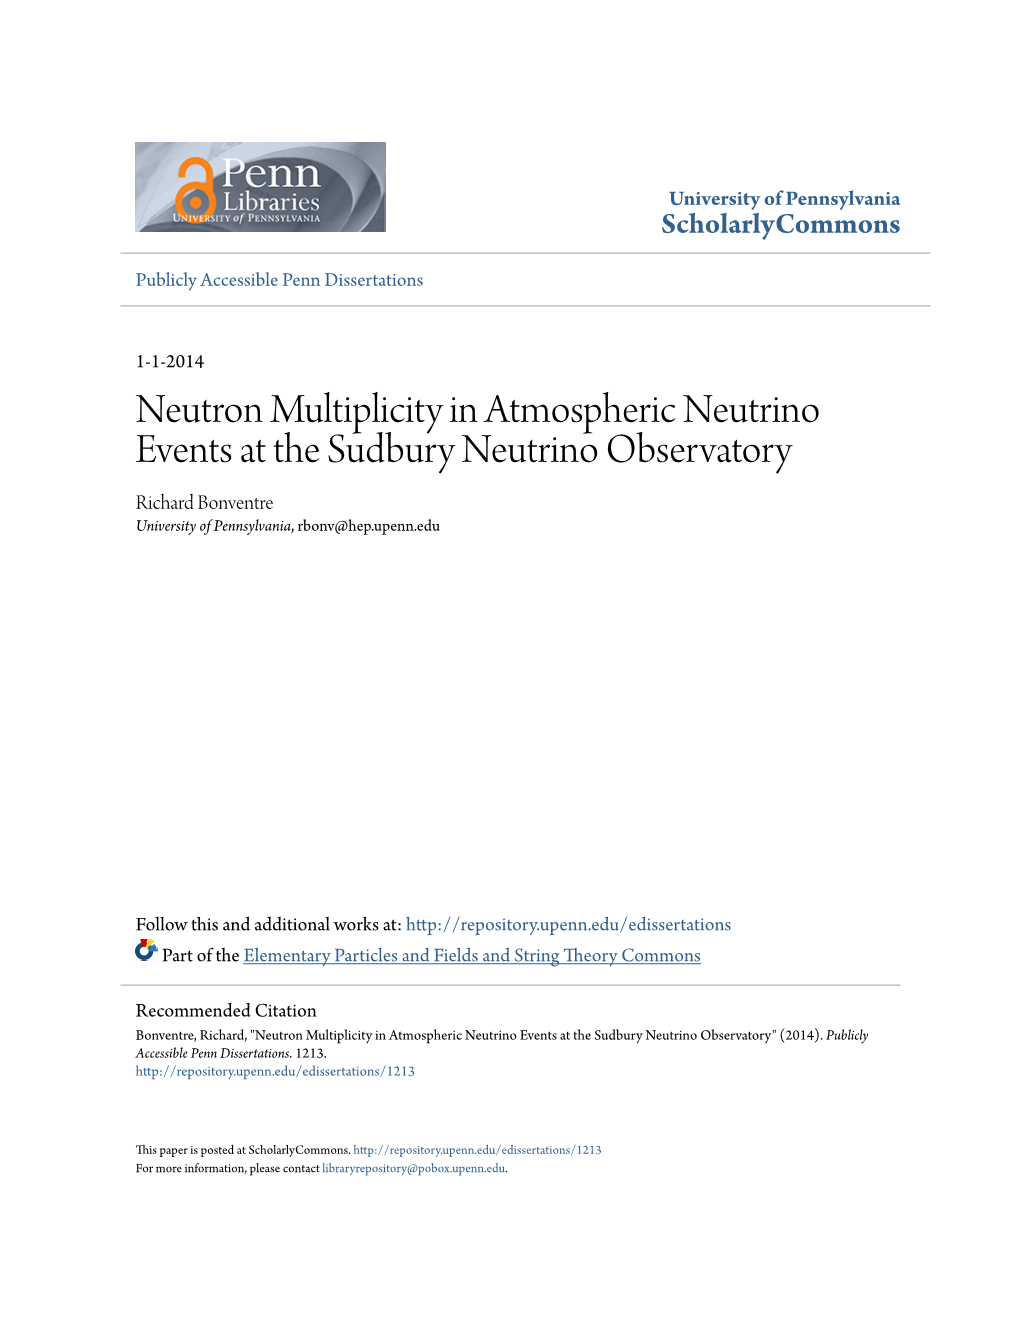 Neutron Multiplicity in Atmospheric Neutrino Events at the Sudbury Neutrino Observatory Richard Bonventre University of Pennsylvania, Rbonv@Hep.Upenn.Edu